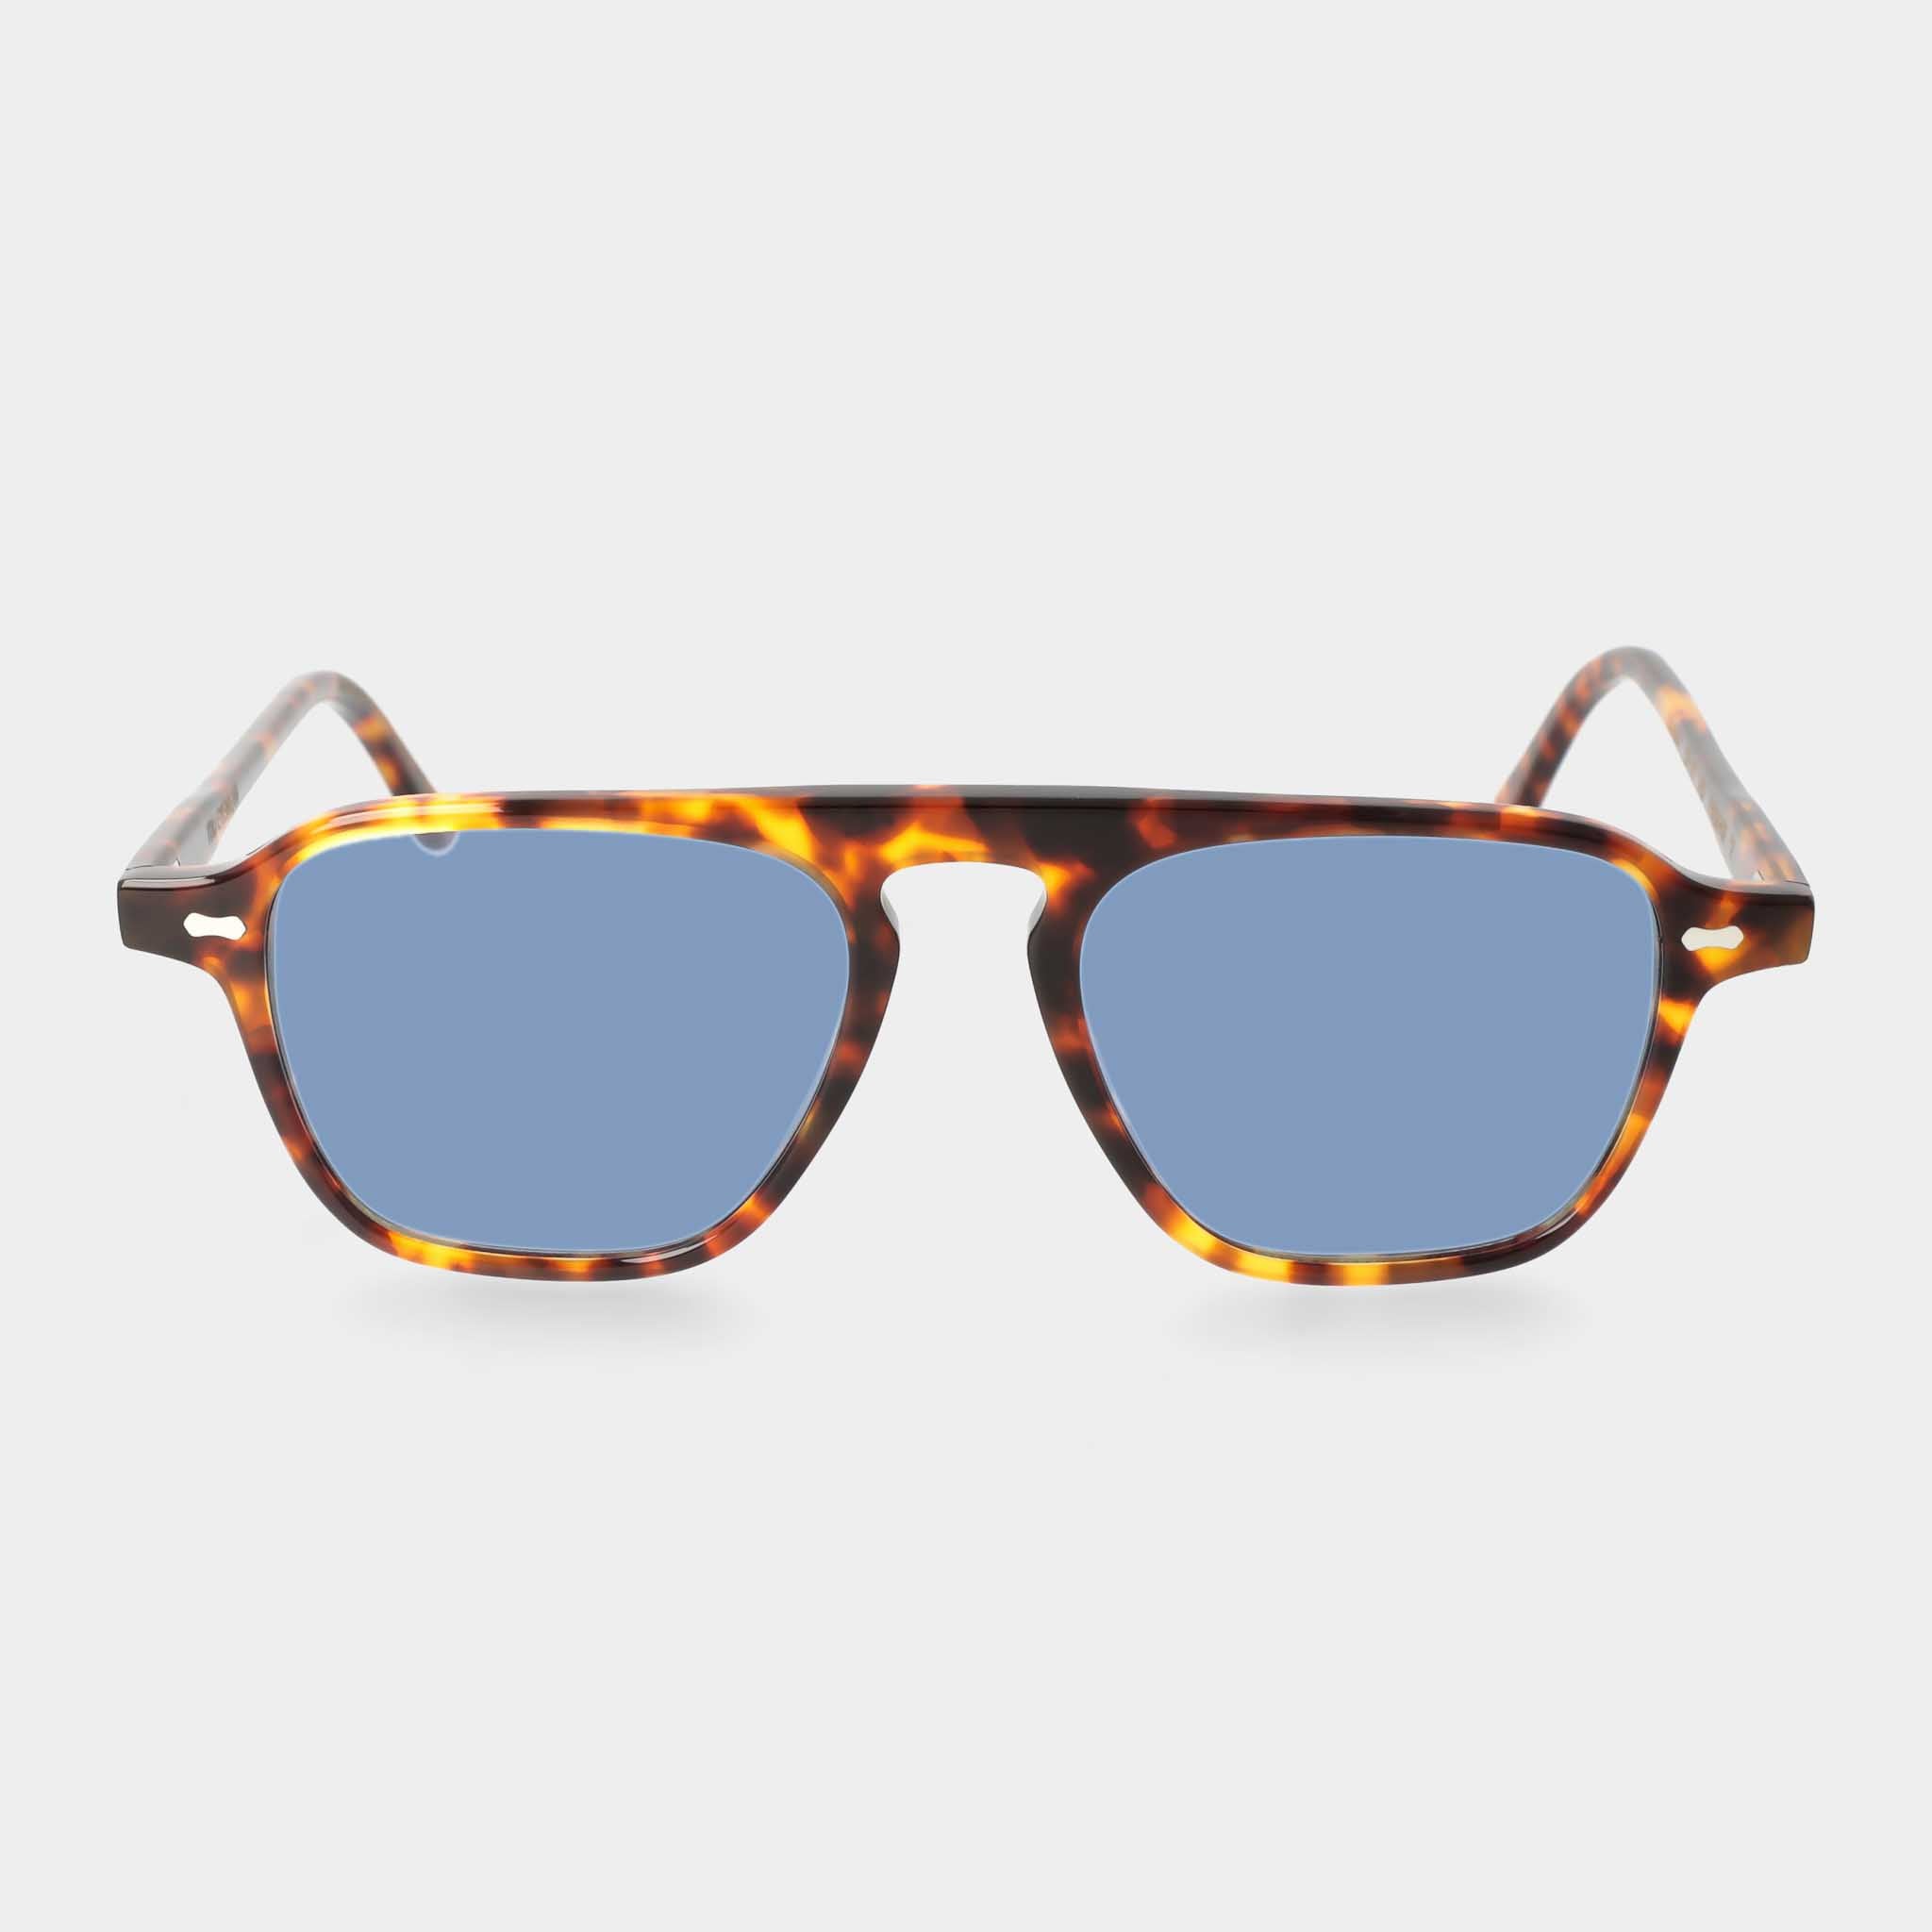 sunglasses-panama-eco-spotted-havana-blue-sustainable-tbd-eyewear-front